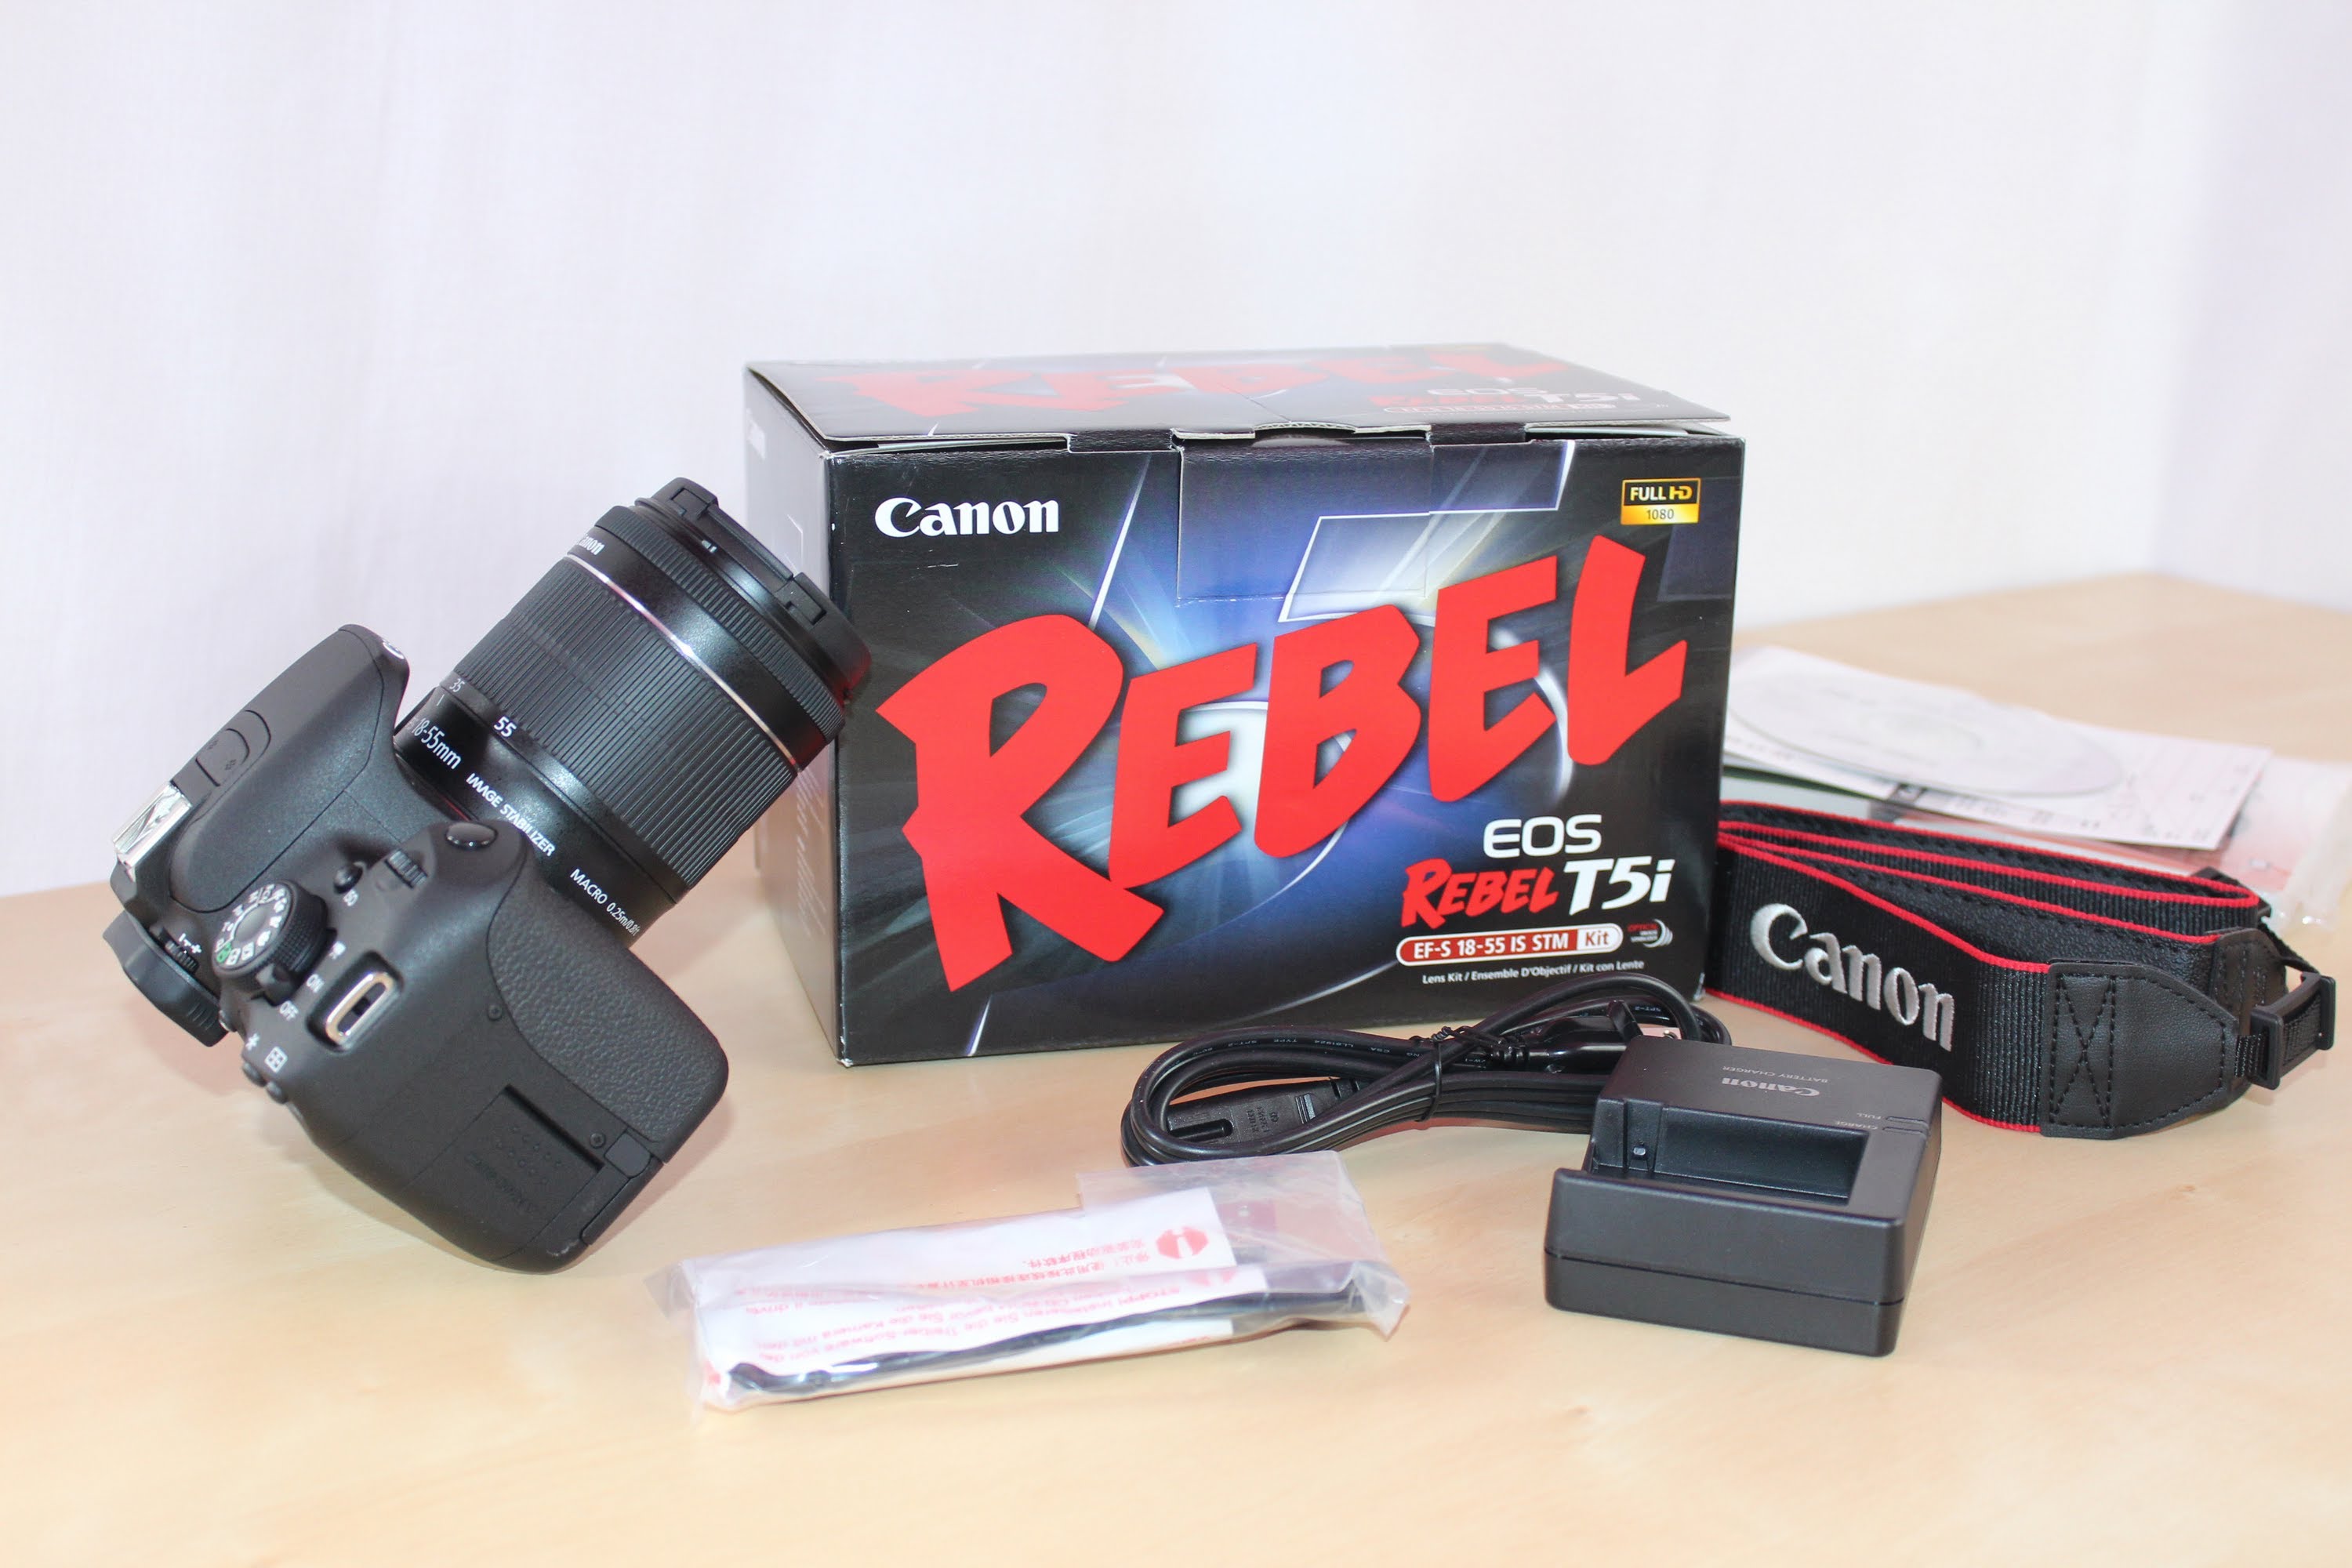 Canon Rebel T5i (700D) Unboxing & First Look | Digital SLR Camera EOS Rebel T5i Unboxing